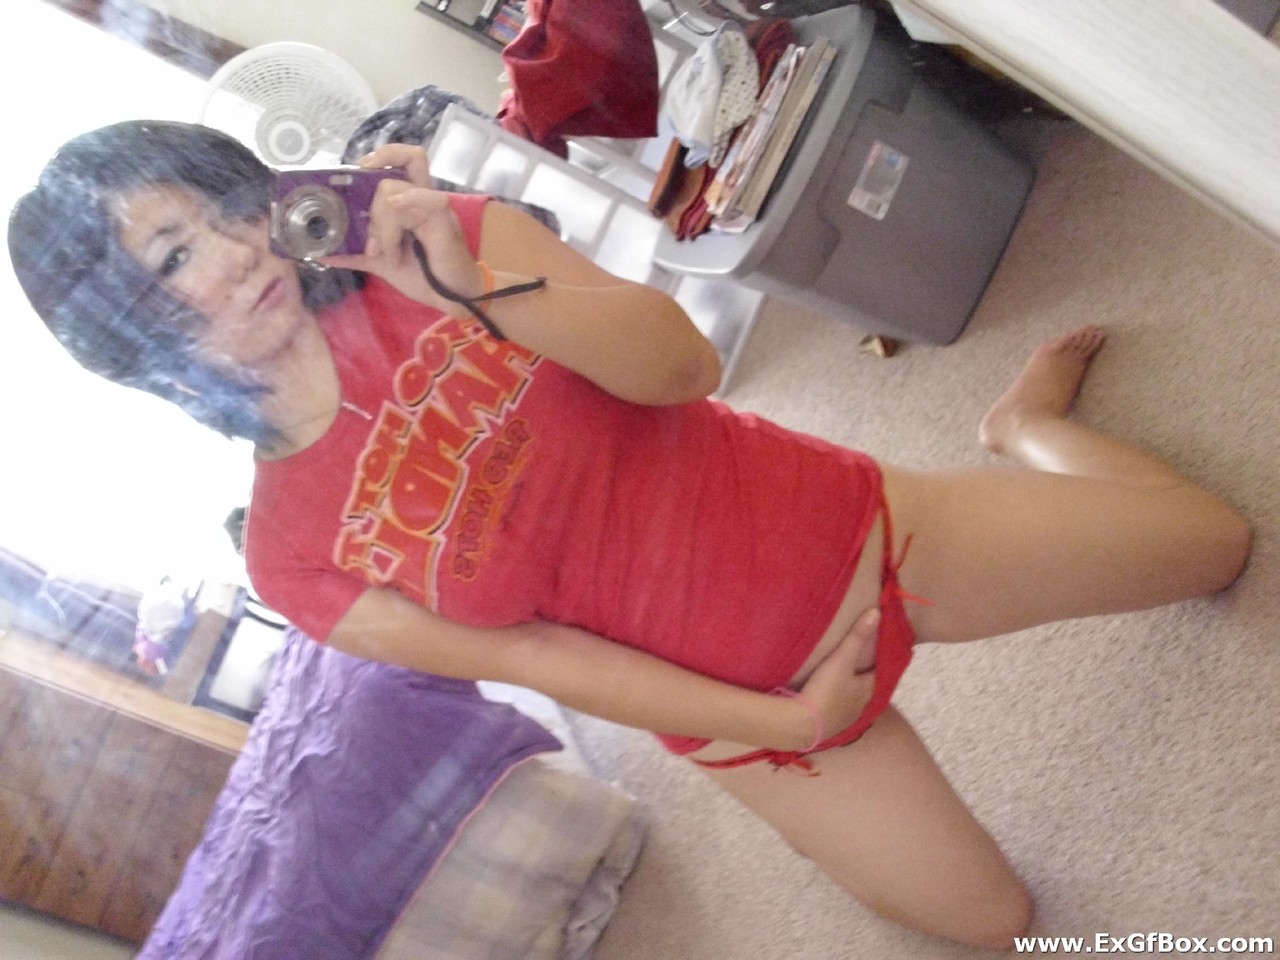 Bootylicious teenage girlfriend takes selfies of her hot body while stripping porno fotoğrafı #426010454 | Ex GF Box Pics, Selfie, mobil porno